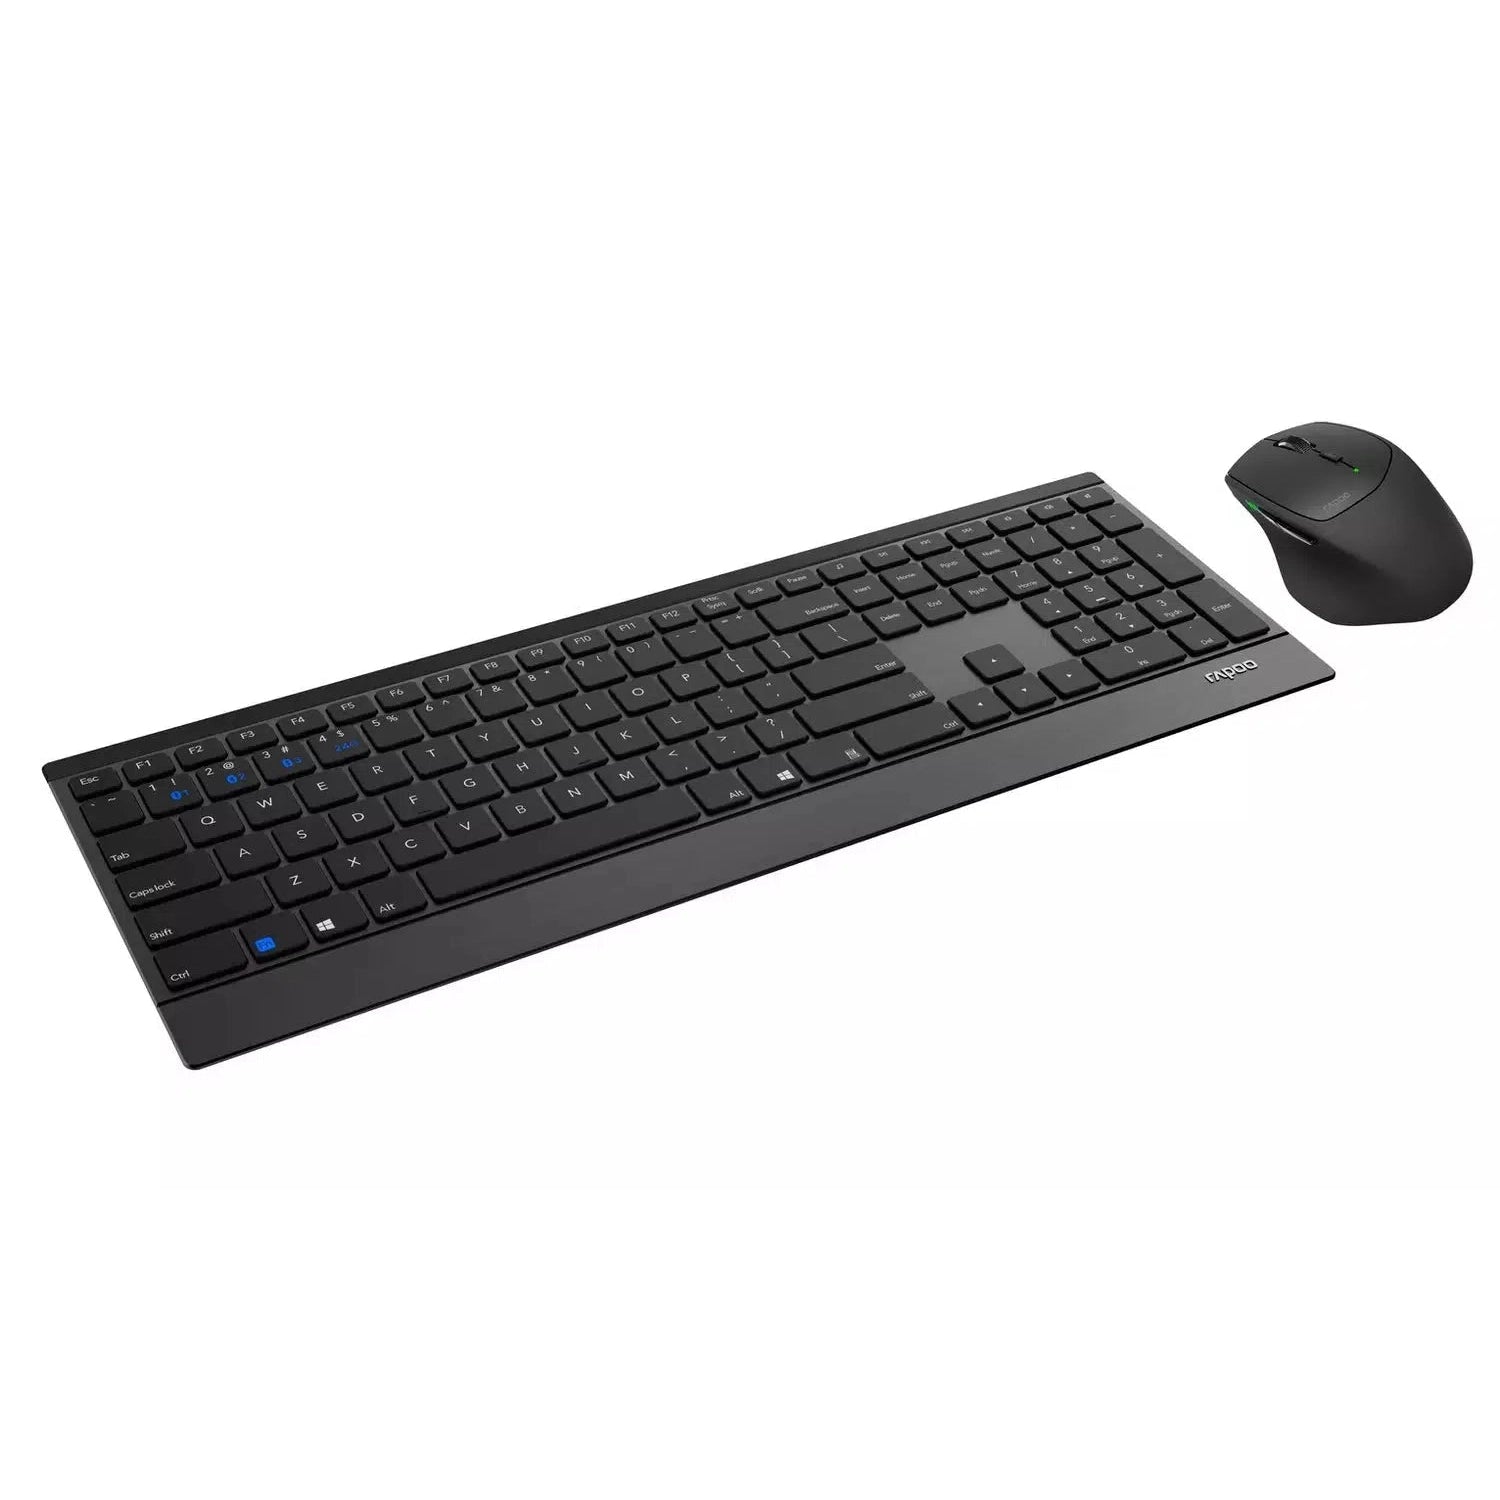 Rapoo 9500M Multi-Mode Wireless Mouse and Keyboard, Black - Refurbished Pristine